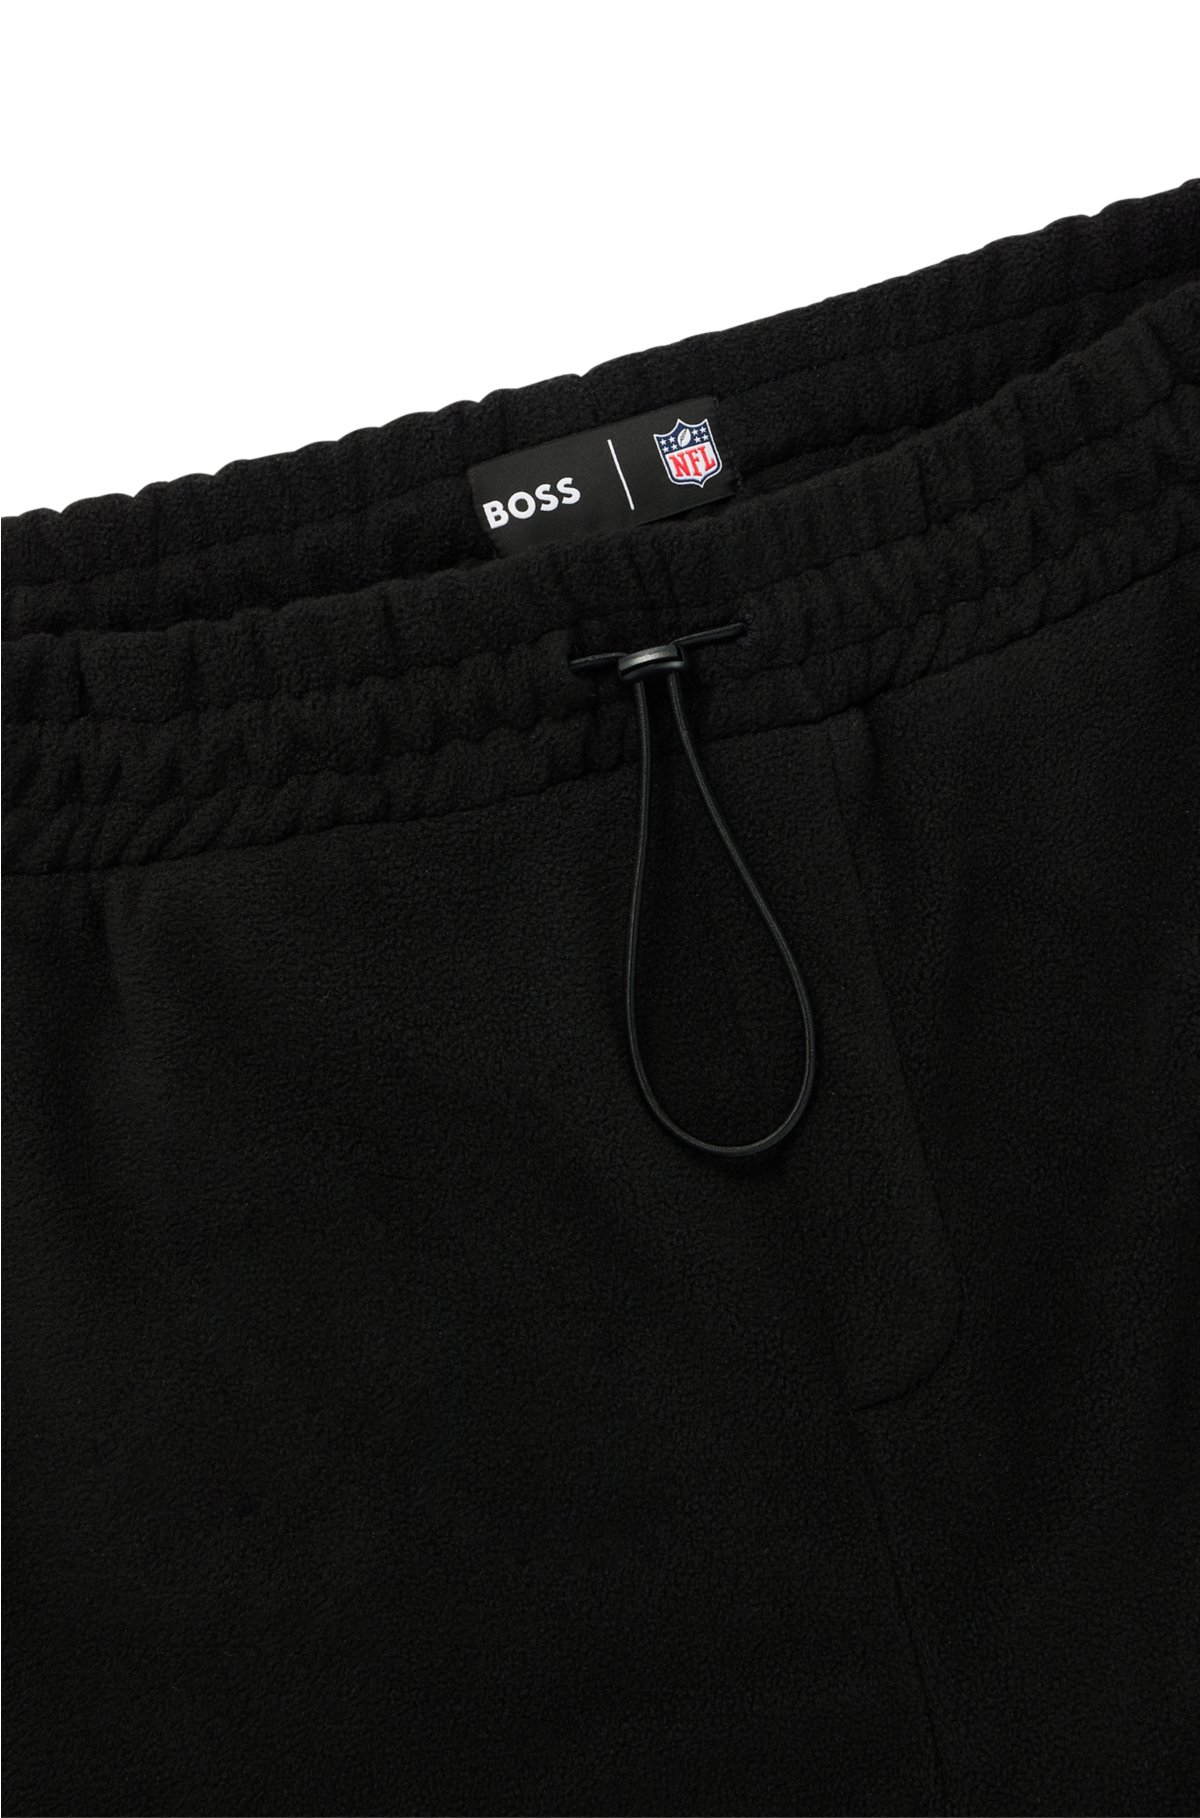  BOSS x NFL fleece tracksuit bottoms with collaborative branding, Raiders